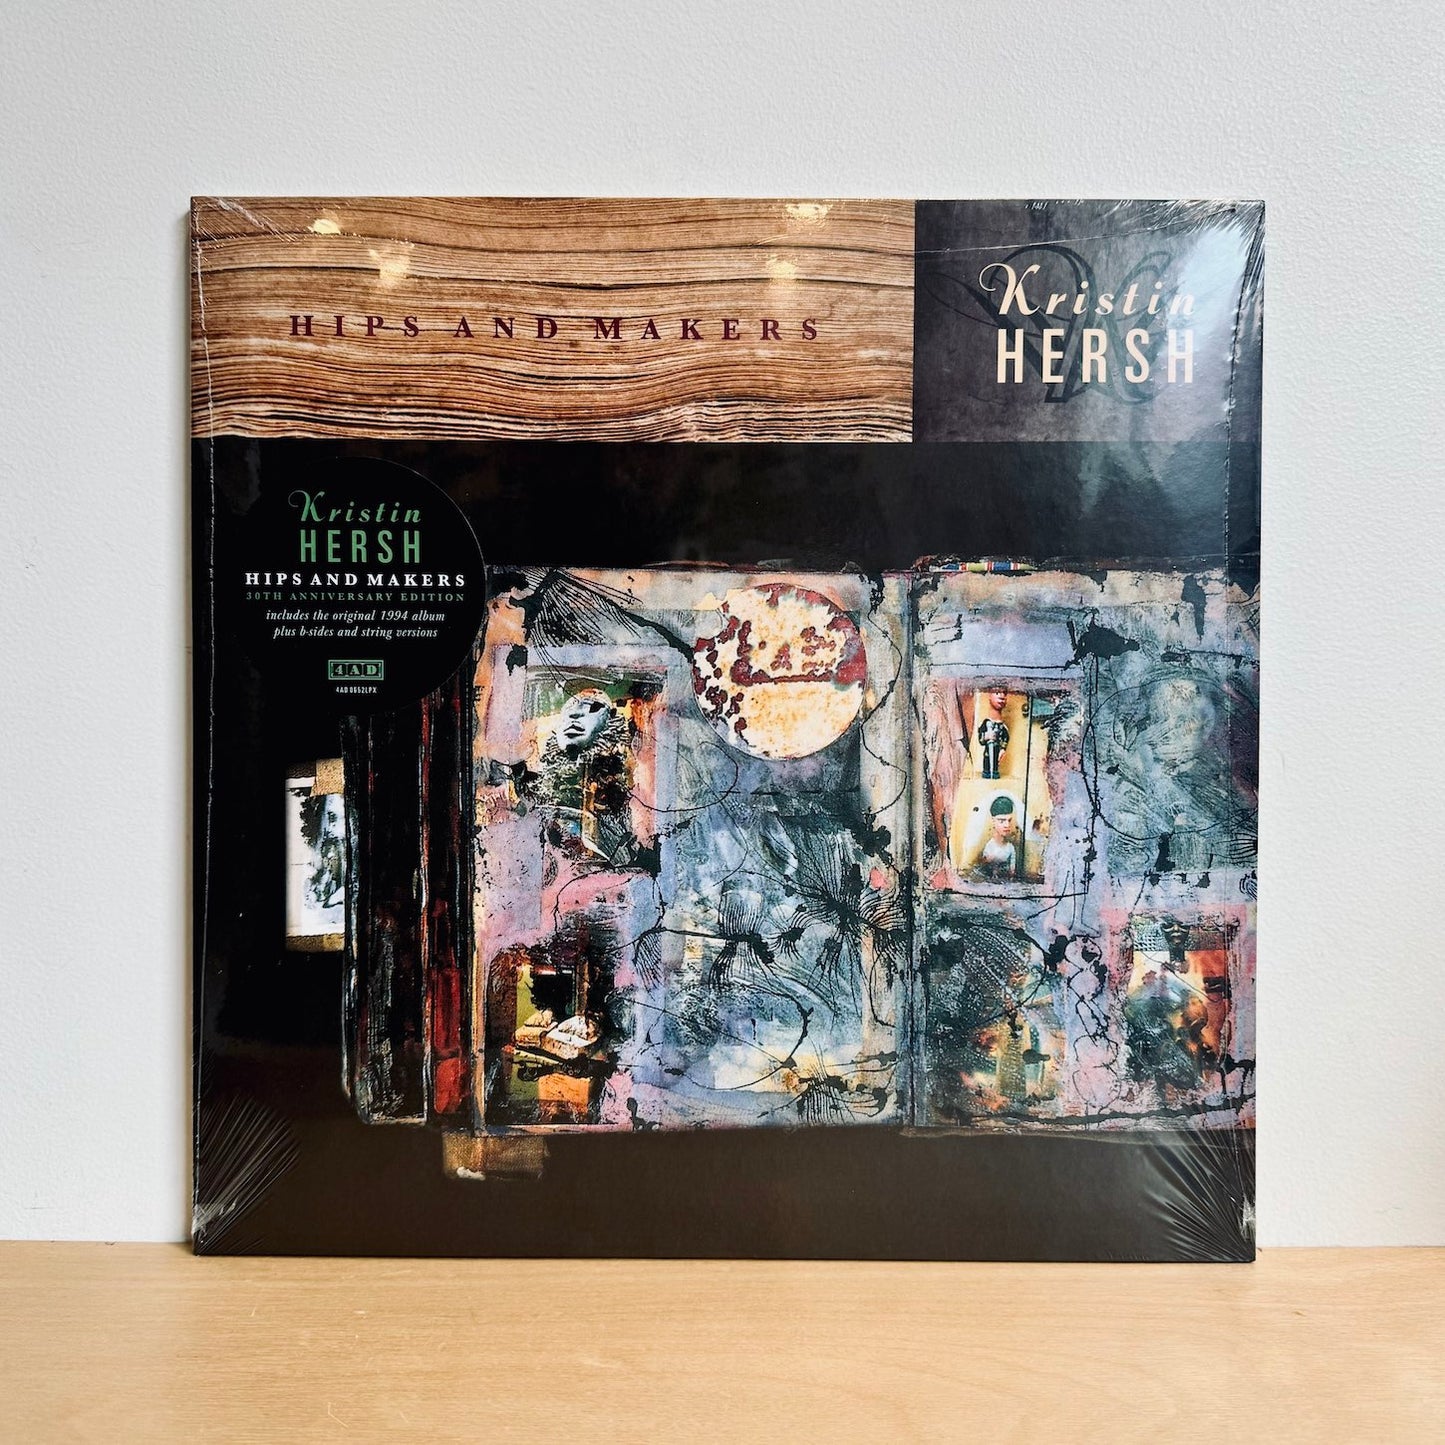 RSD2024 - KRISTIN HERSH - HIPS AND MAKERS. 2LP [30th Anniversary Teal Vinyl / Ltd. Ed. of 600]